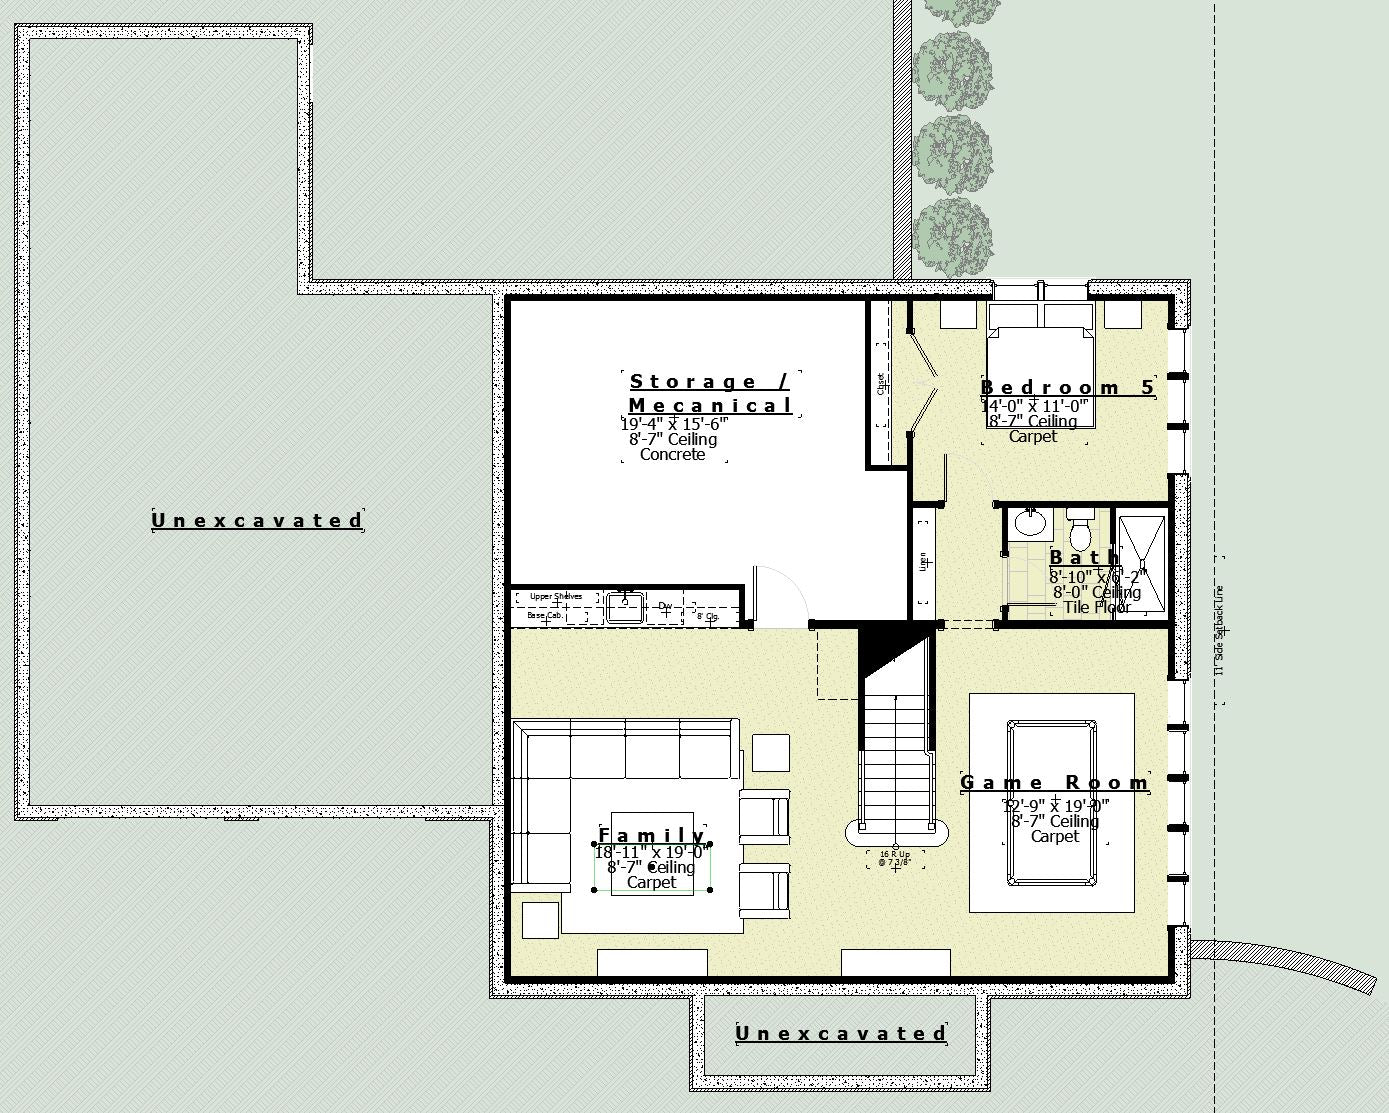 Hemlock - Home Design and Floor Plan - SketchPad House Plans